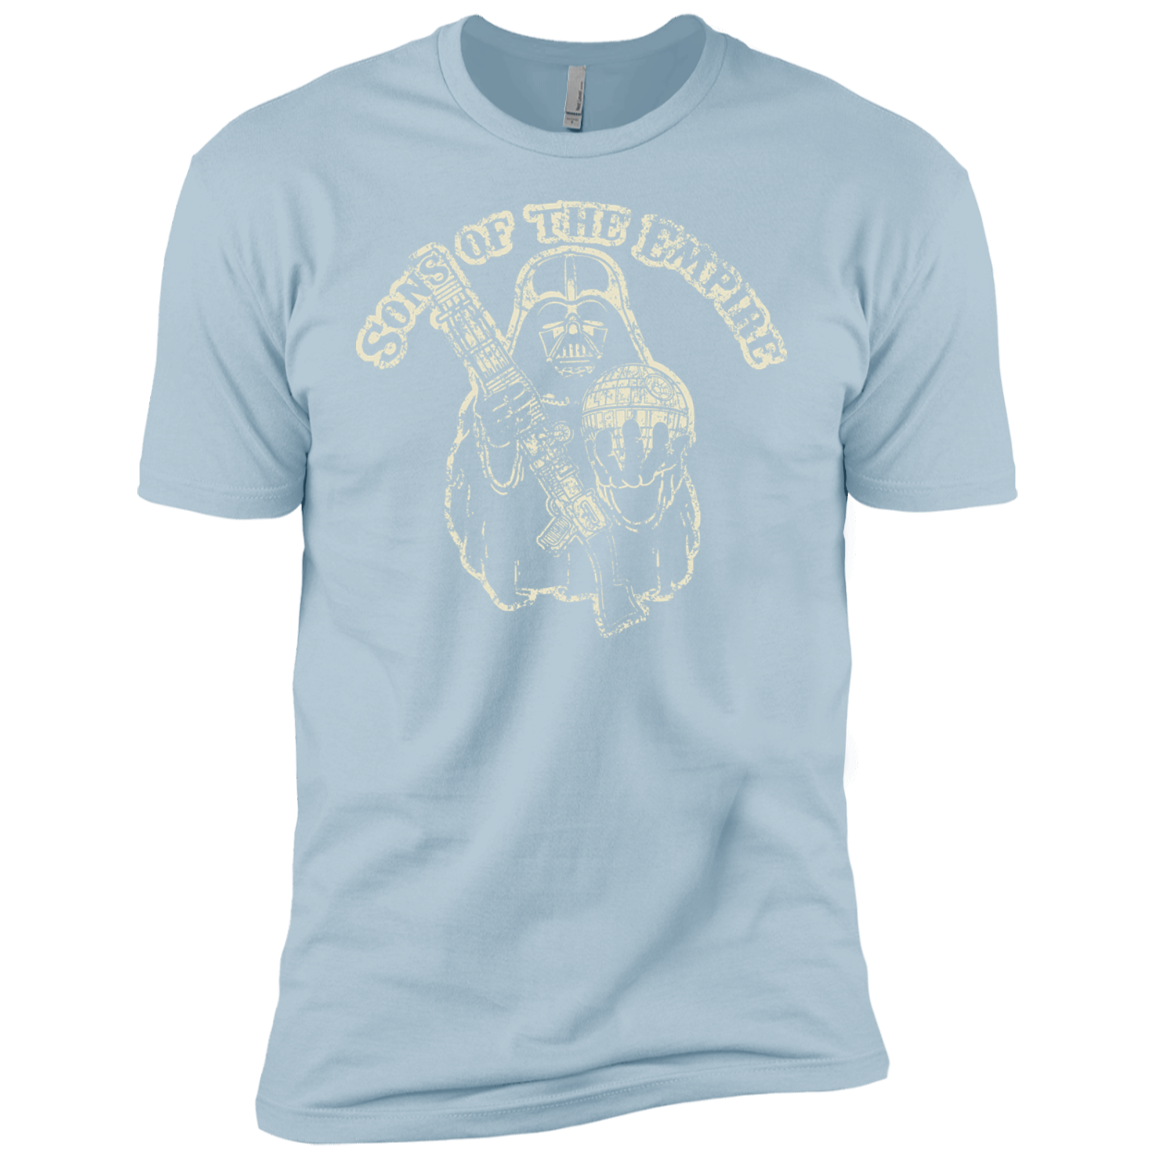 Sons of the empire Boys Premium T-Shirt